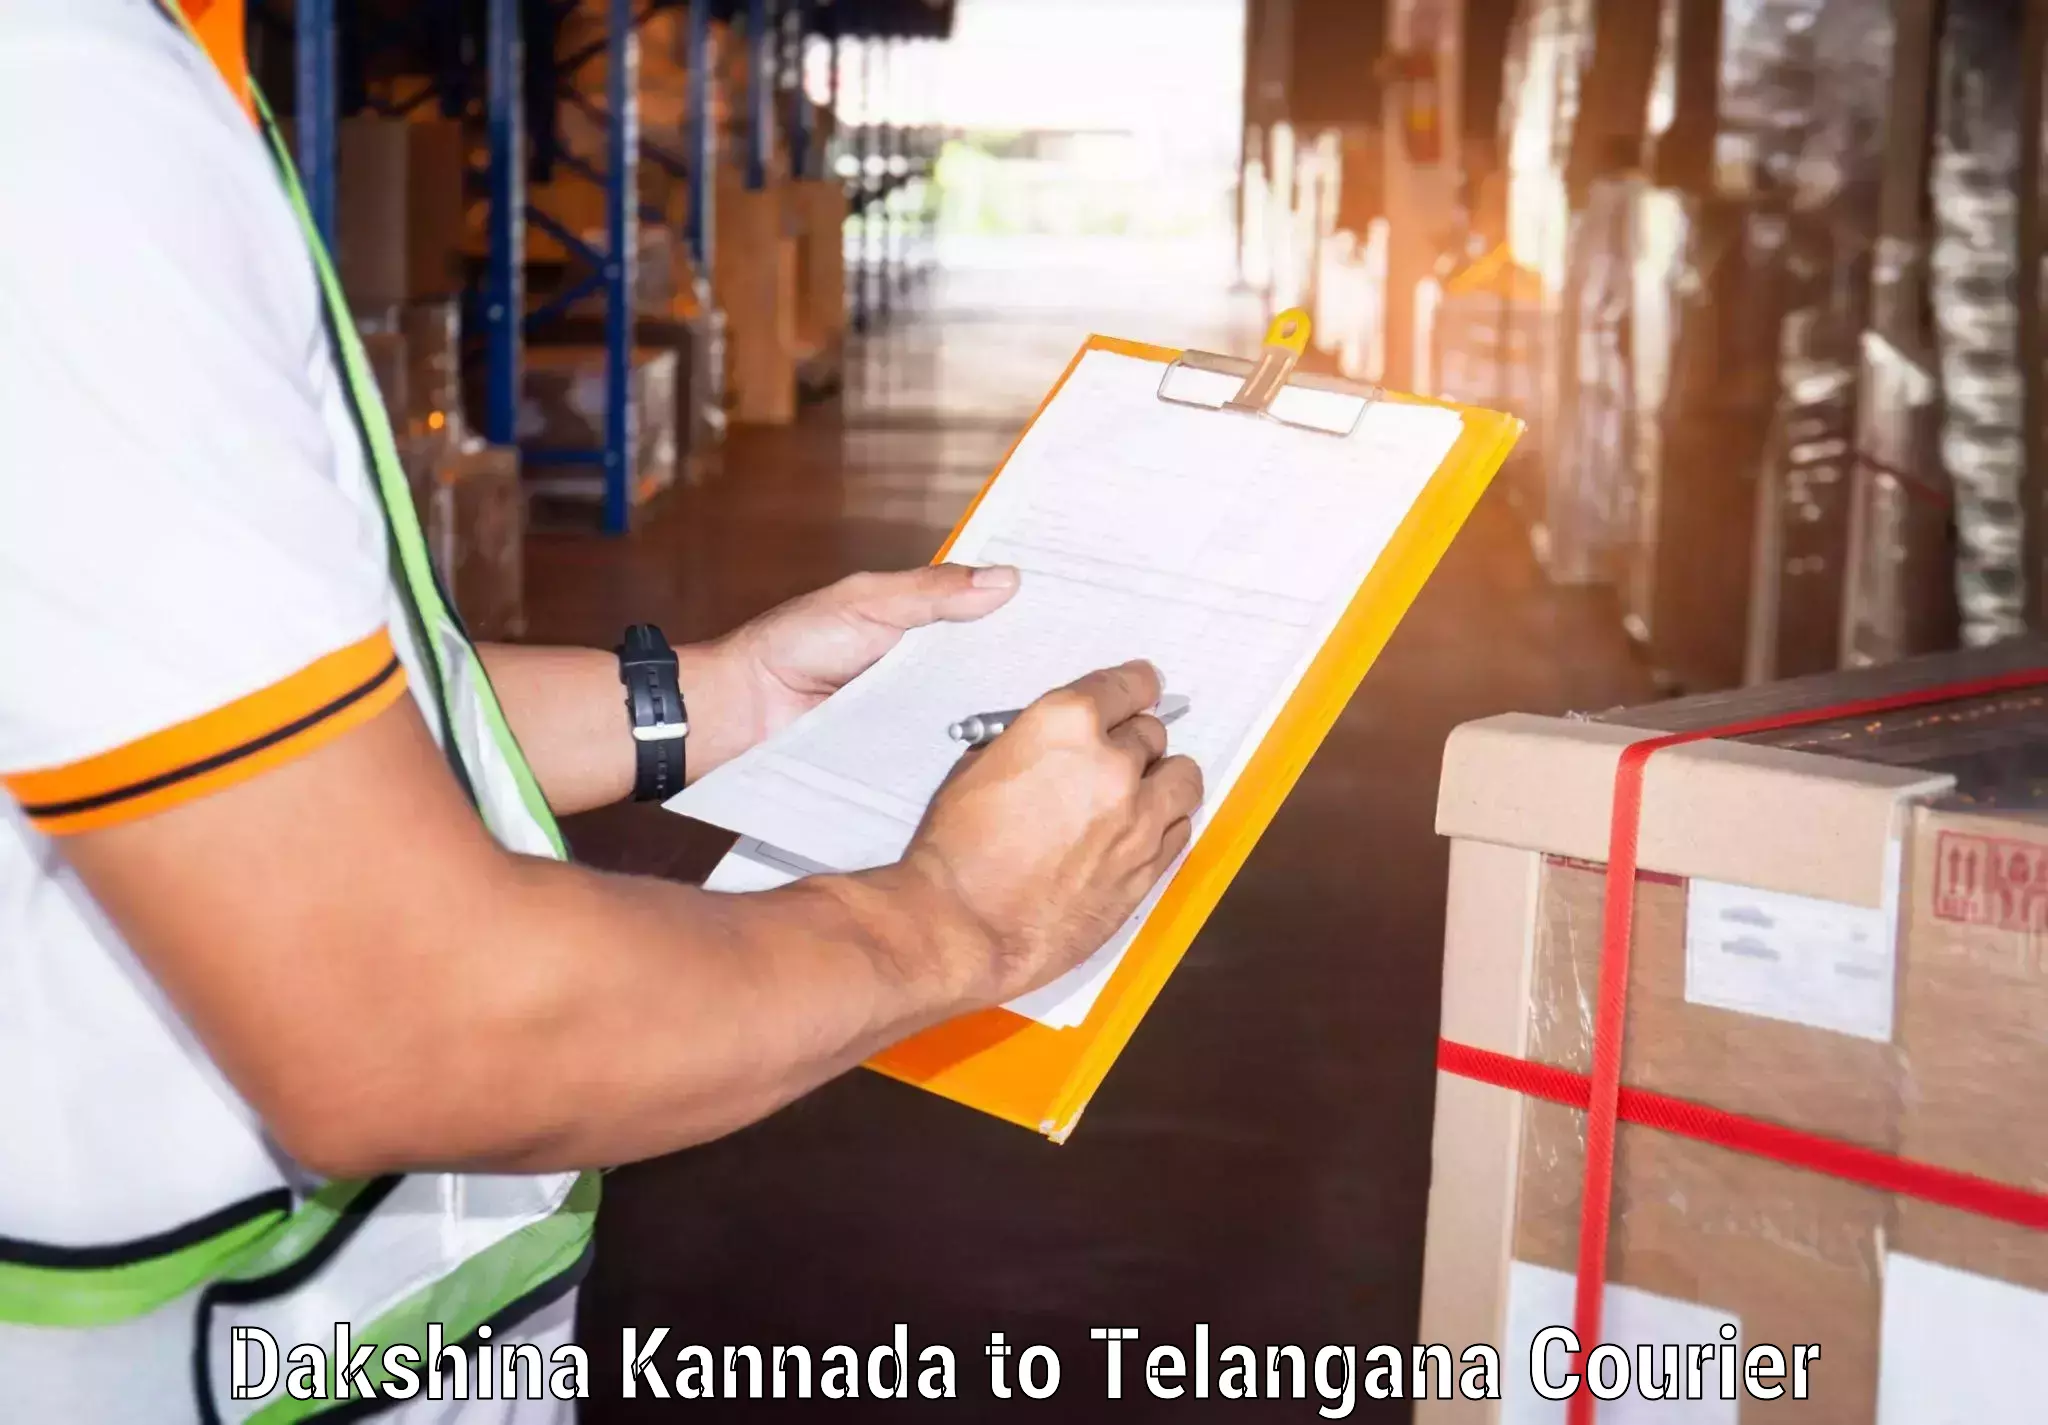 Courier service comparison in Dakshina Kannada to Sathupally